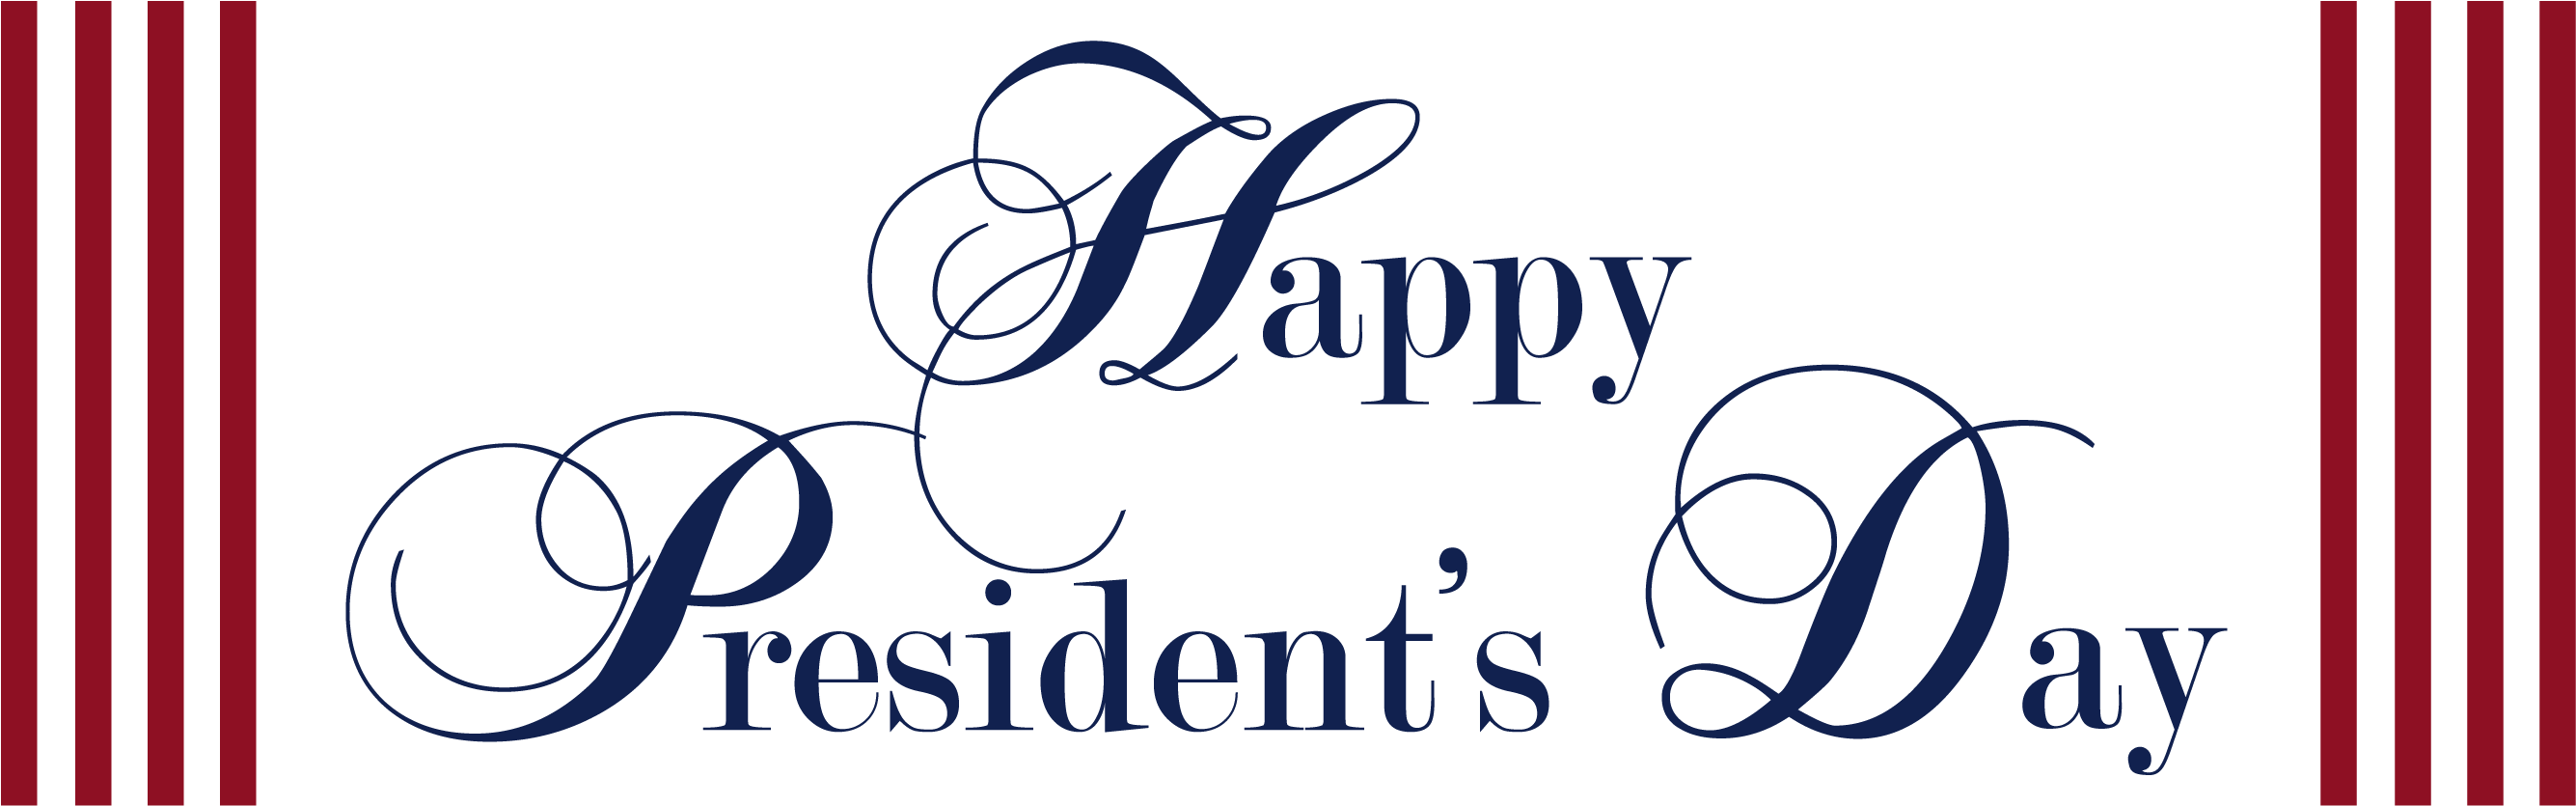 Happy Présidents Day PNG Image